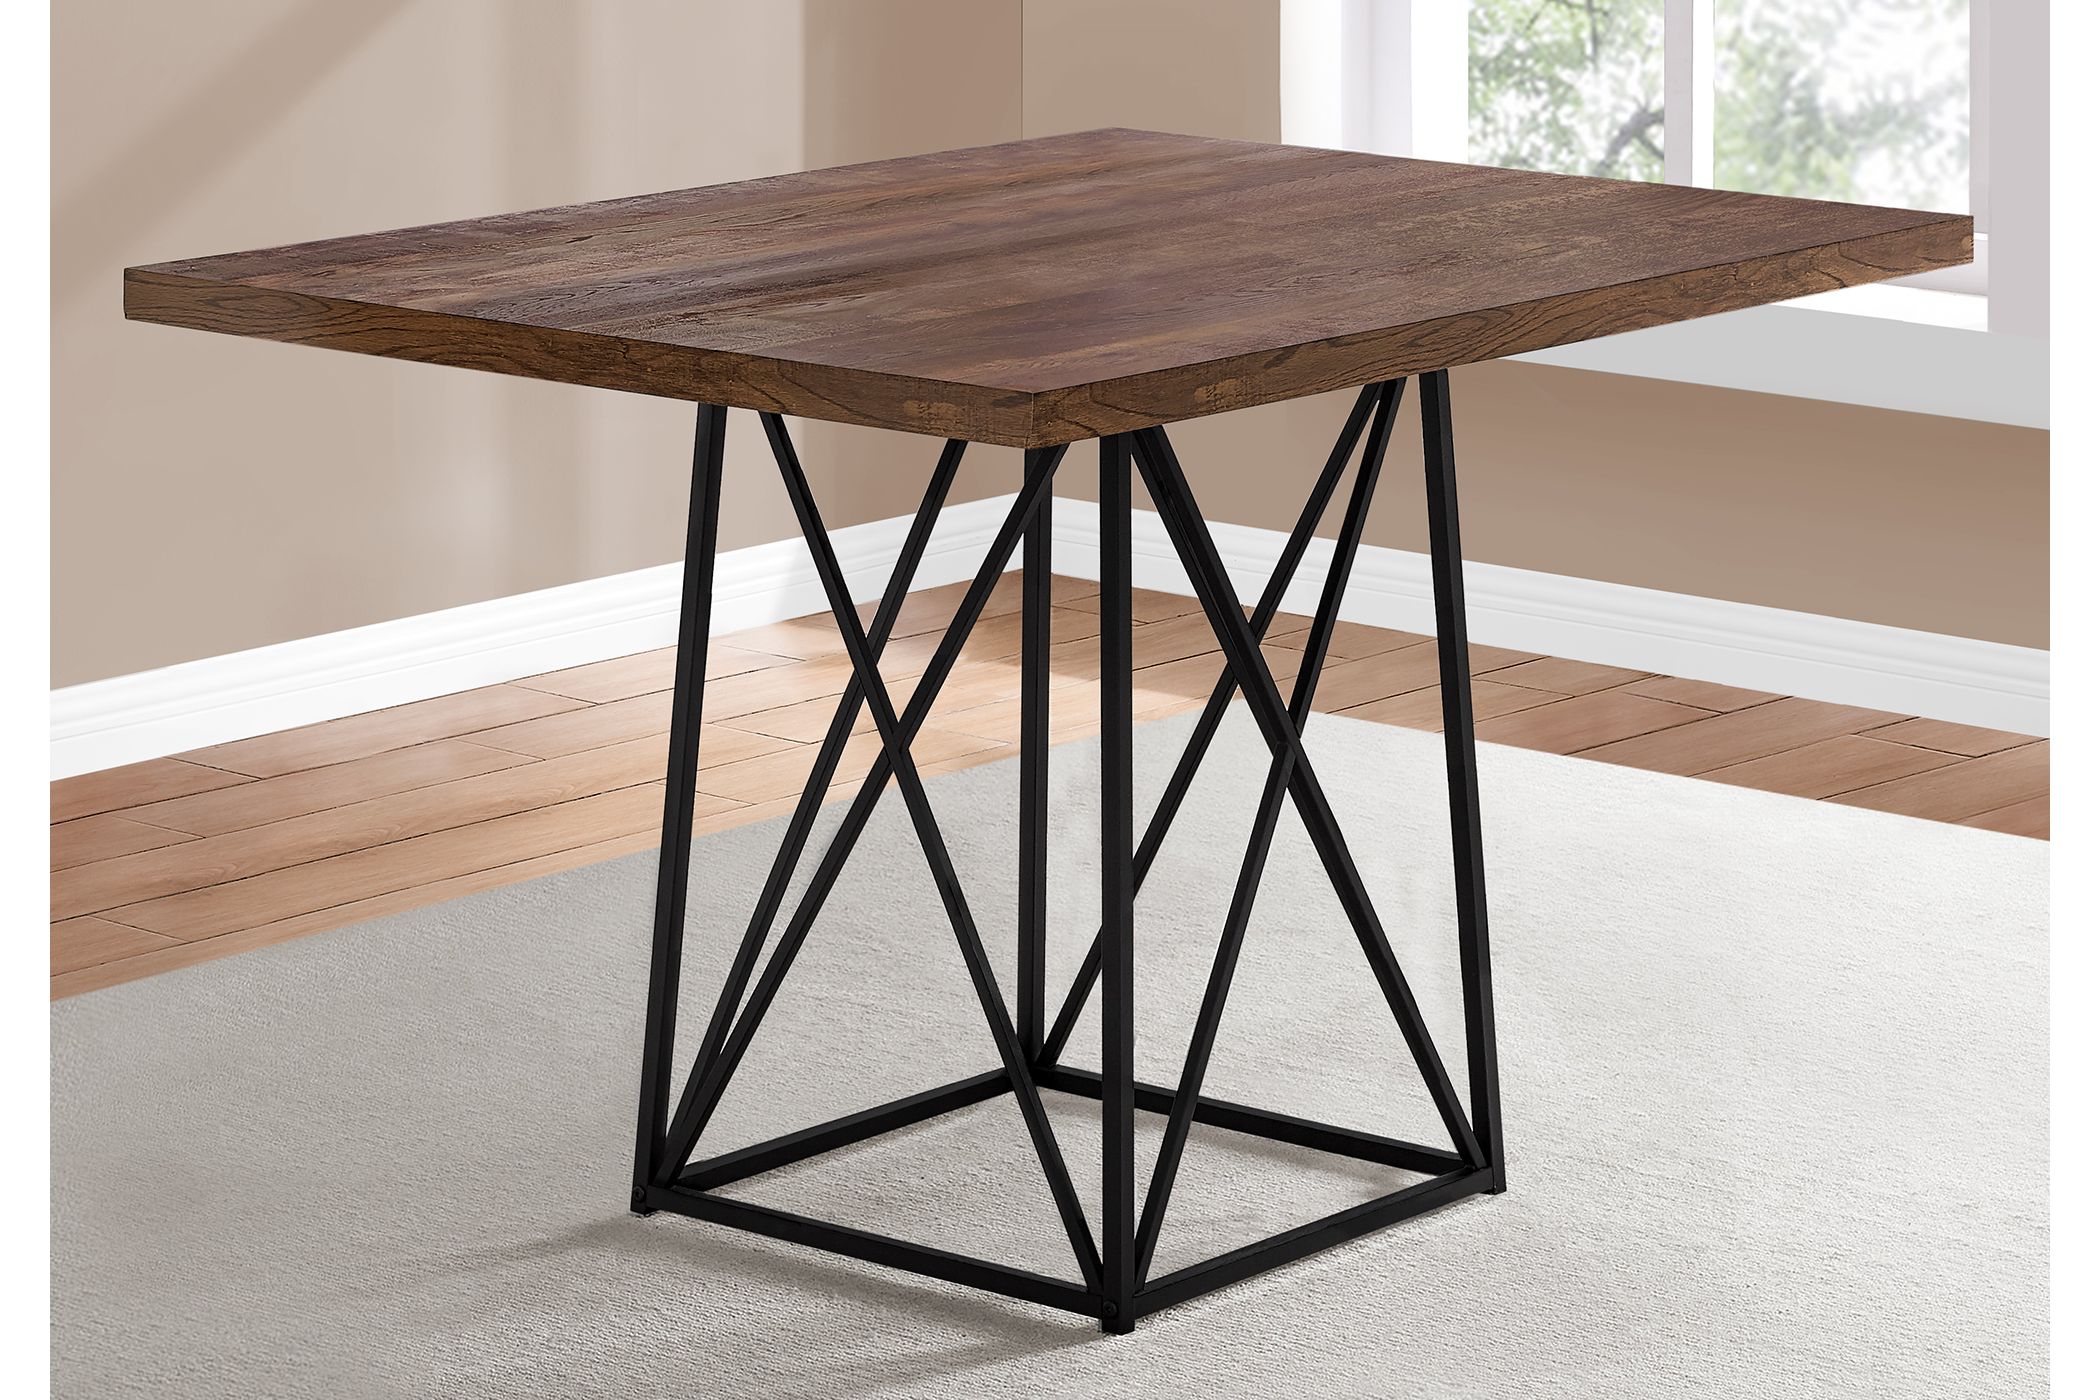 Dining Table - 36"X 48" / Brown Reclaimed Wood-Look/Black